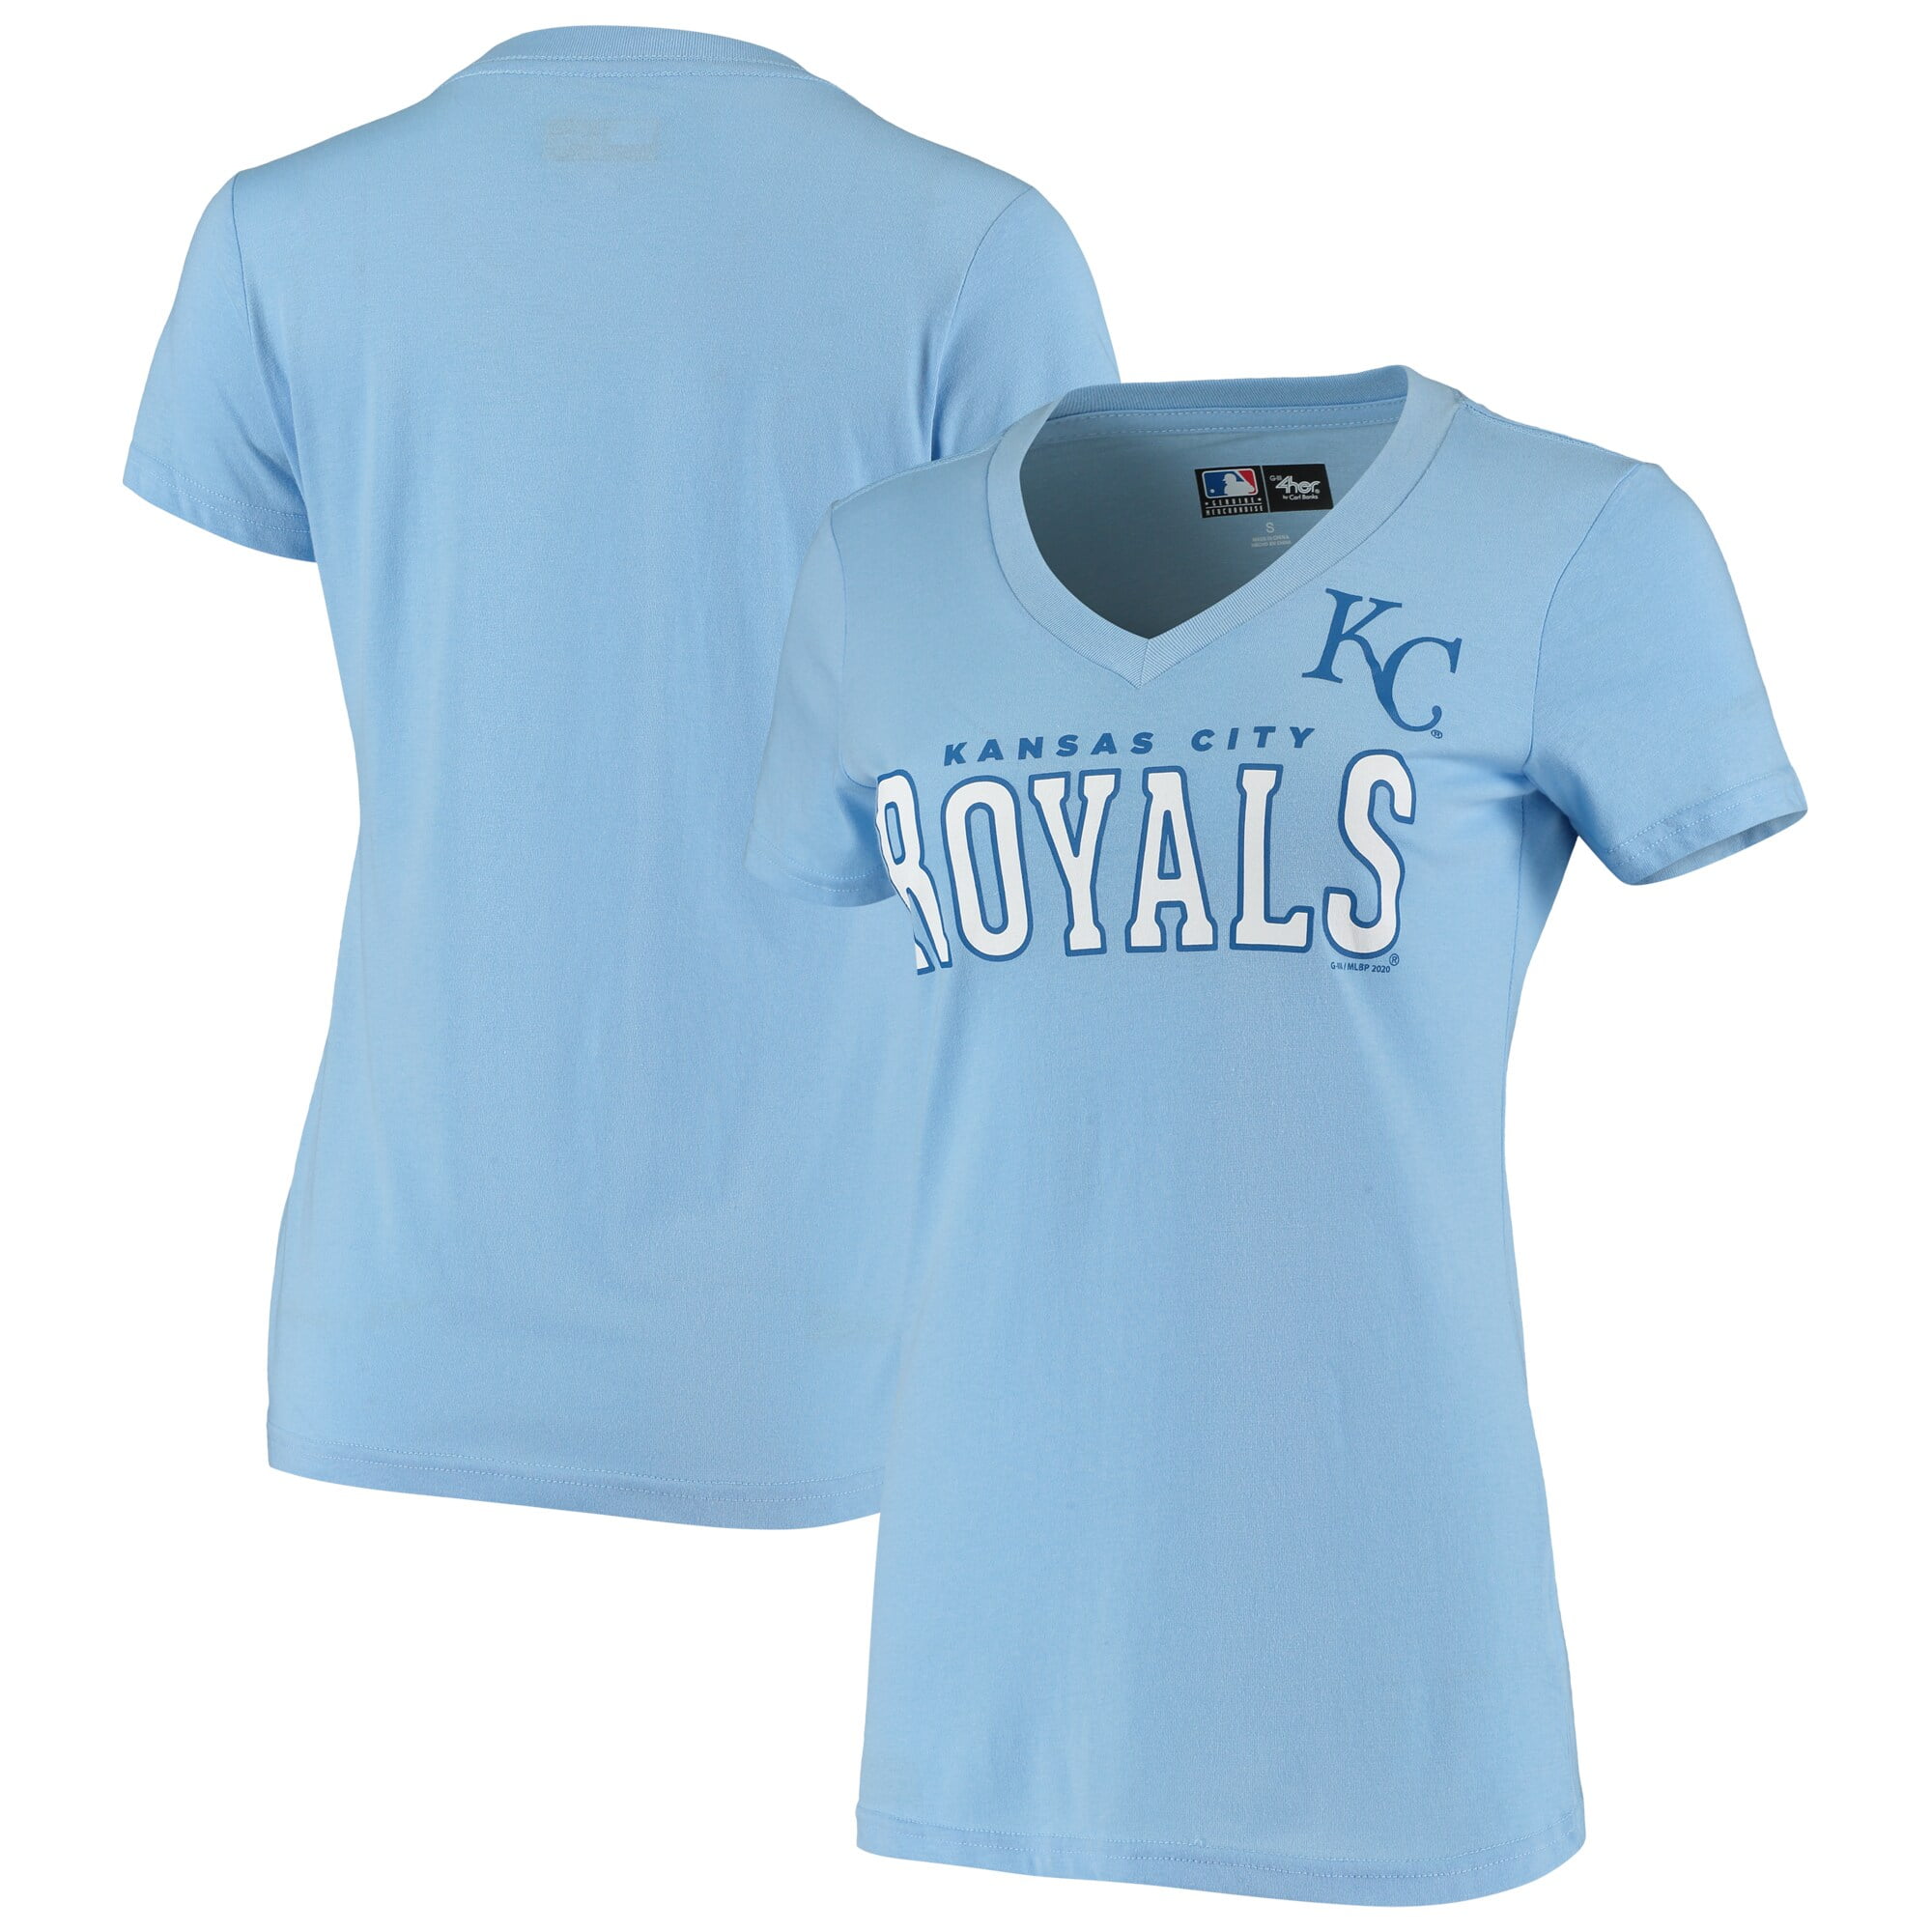 kc royals shirts for women